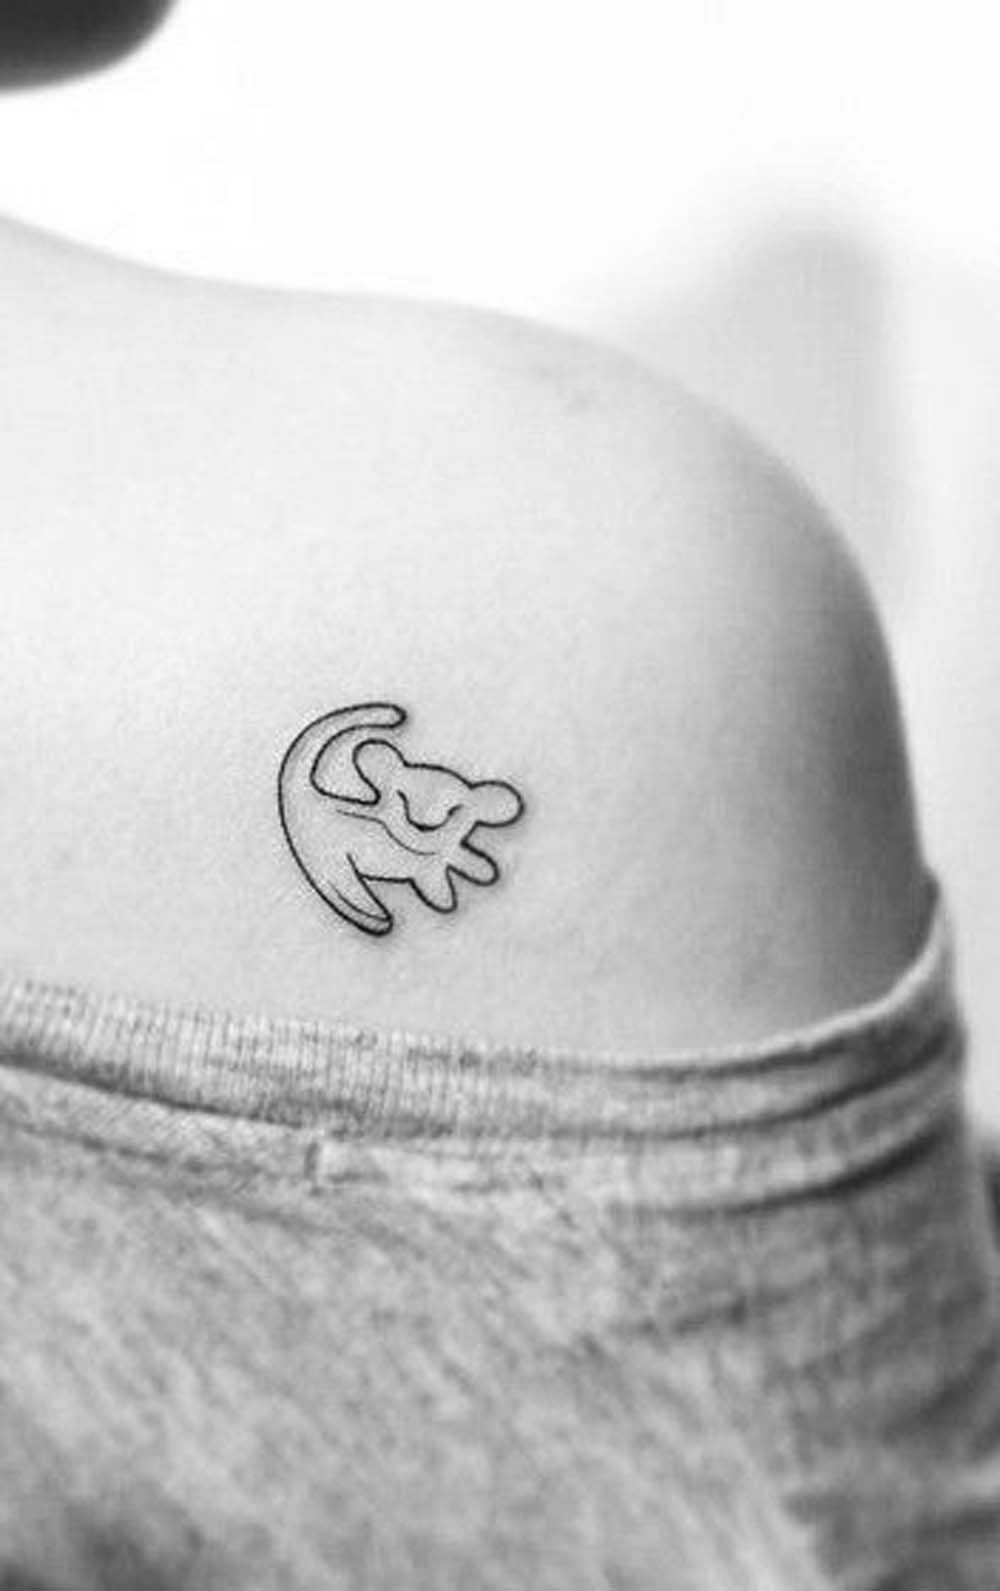 Minimalistic Small Simba Lion King Shoulder Arm Tattoo Ideas for Women -  ideas pequeñas del tatuaje del hombro del león para las mujeres - www.MyBodiArt.com